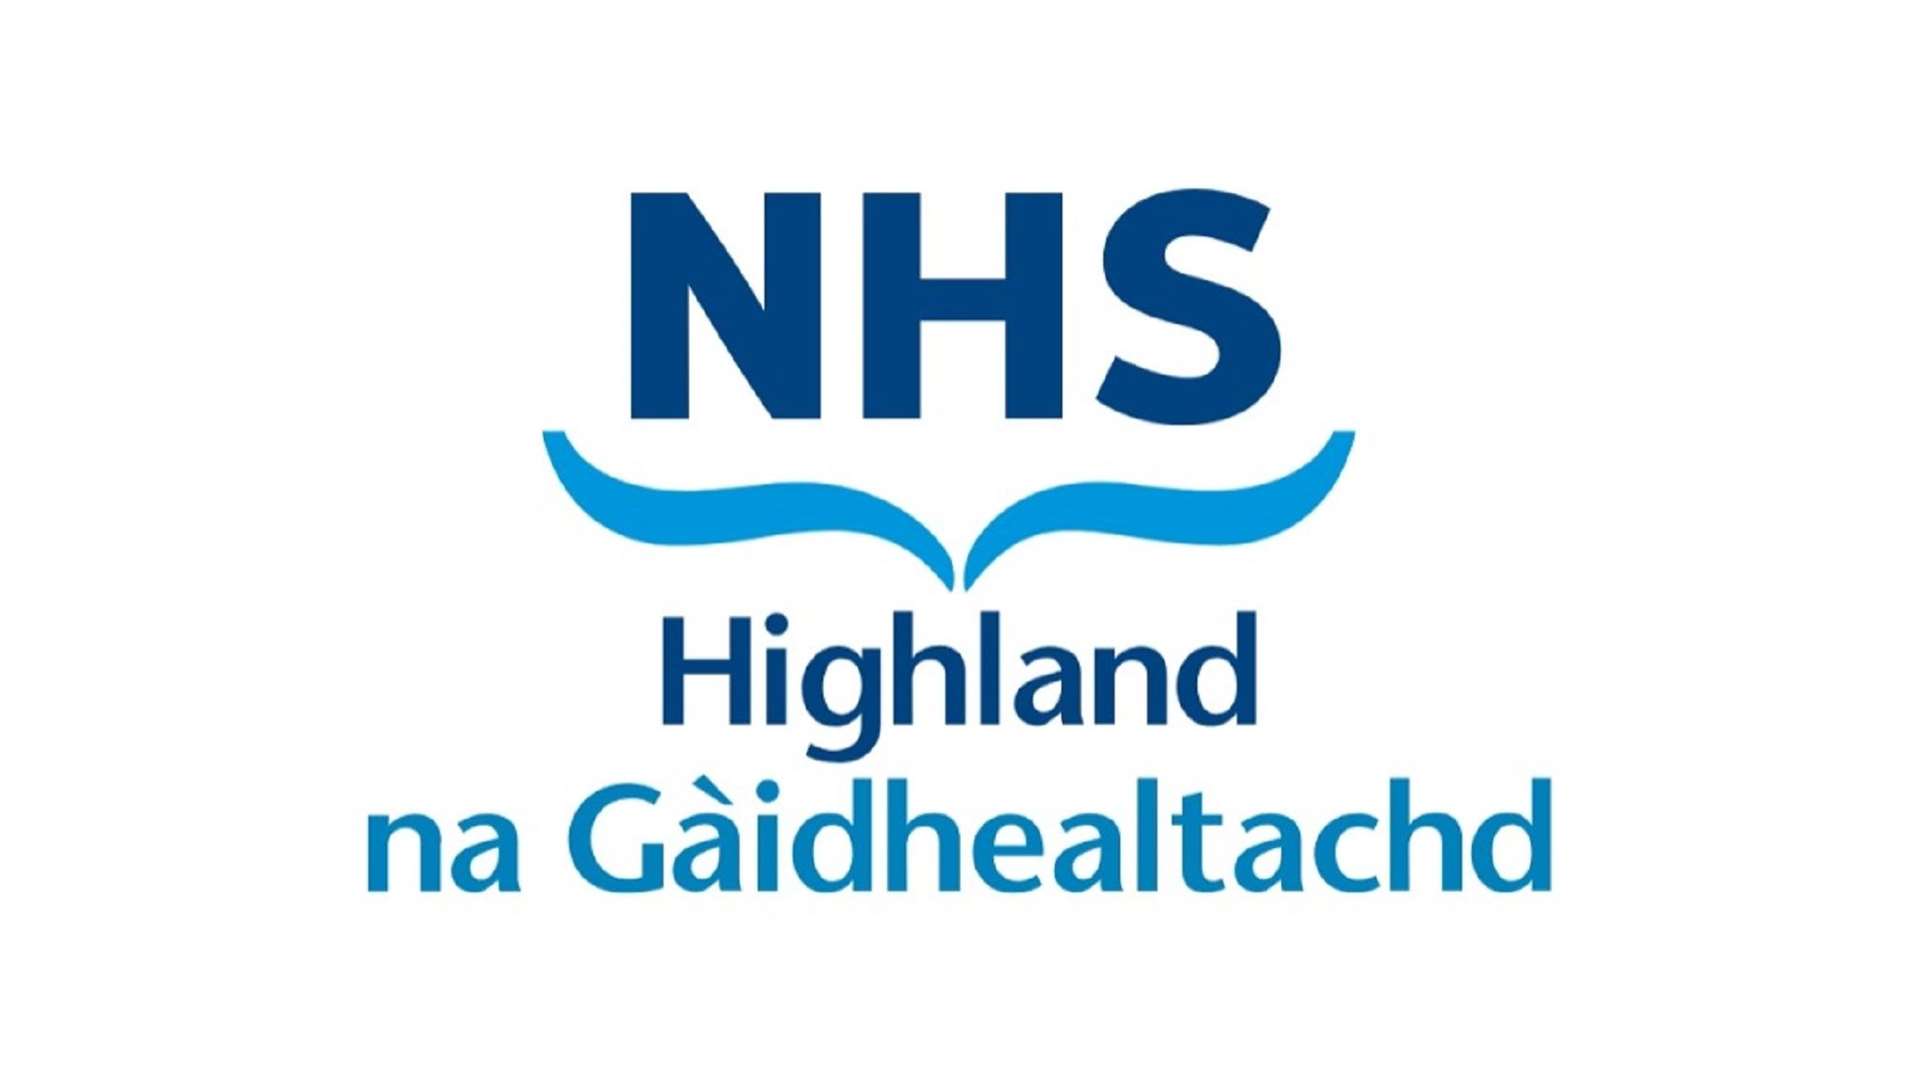 The new NHS dual language logo.